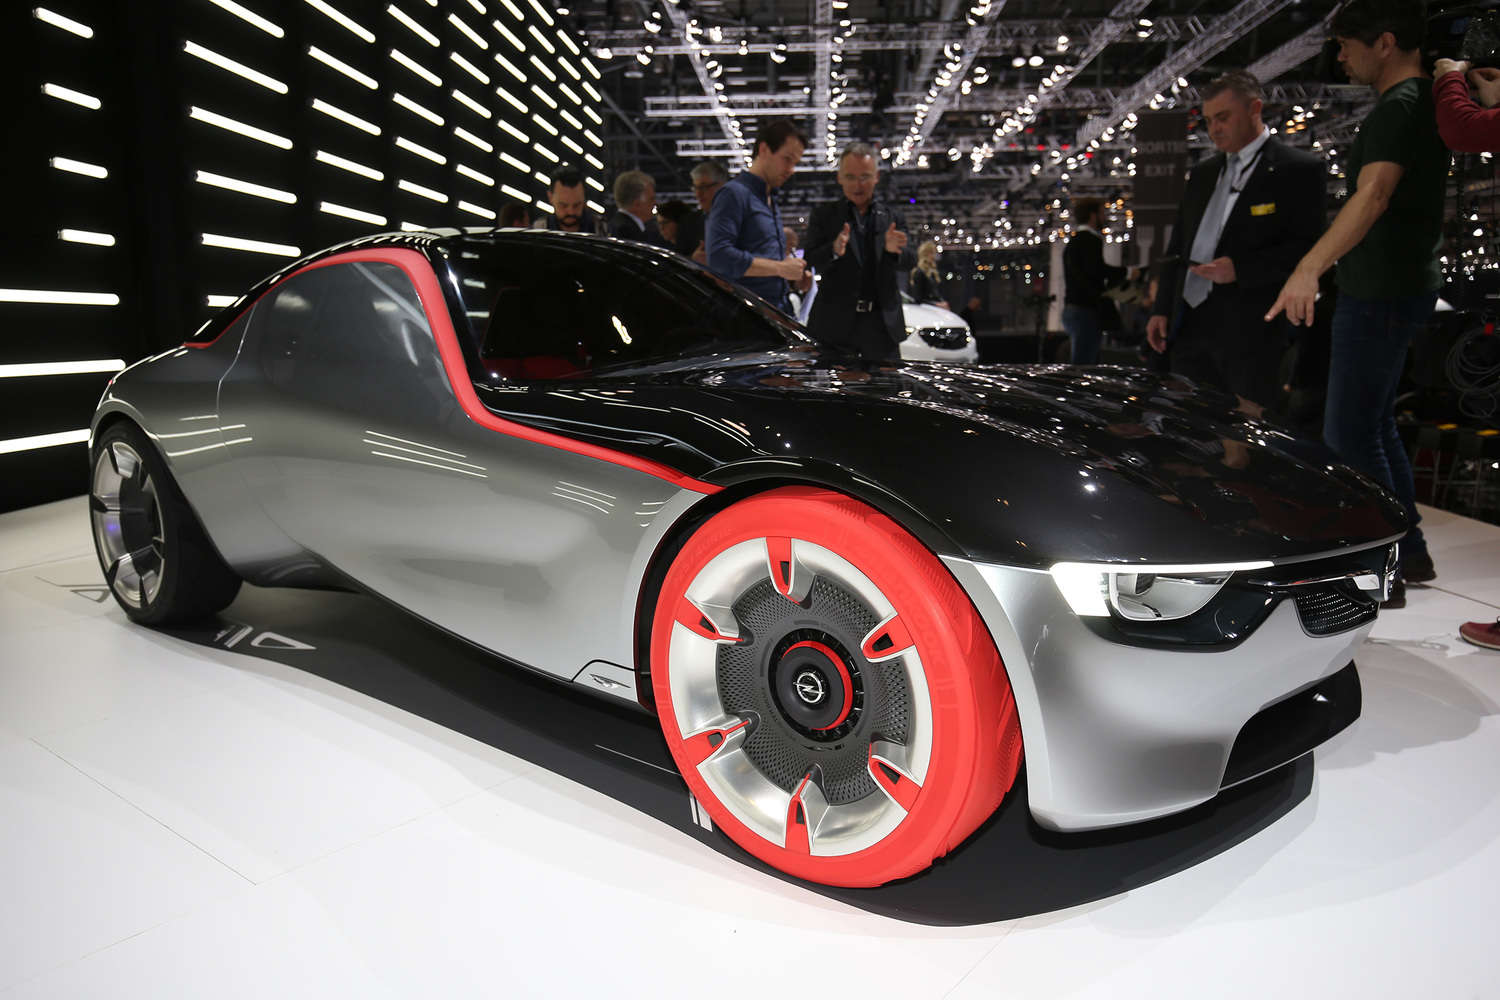 Future sports. 2016-Opel gt Concept. Opel gt Concept. Автомобиль будущего. Выставка автомобилей будущего.